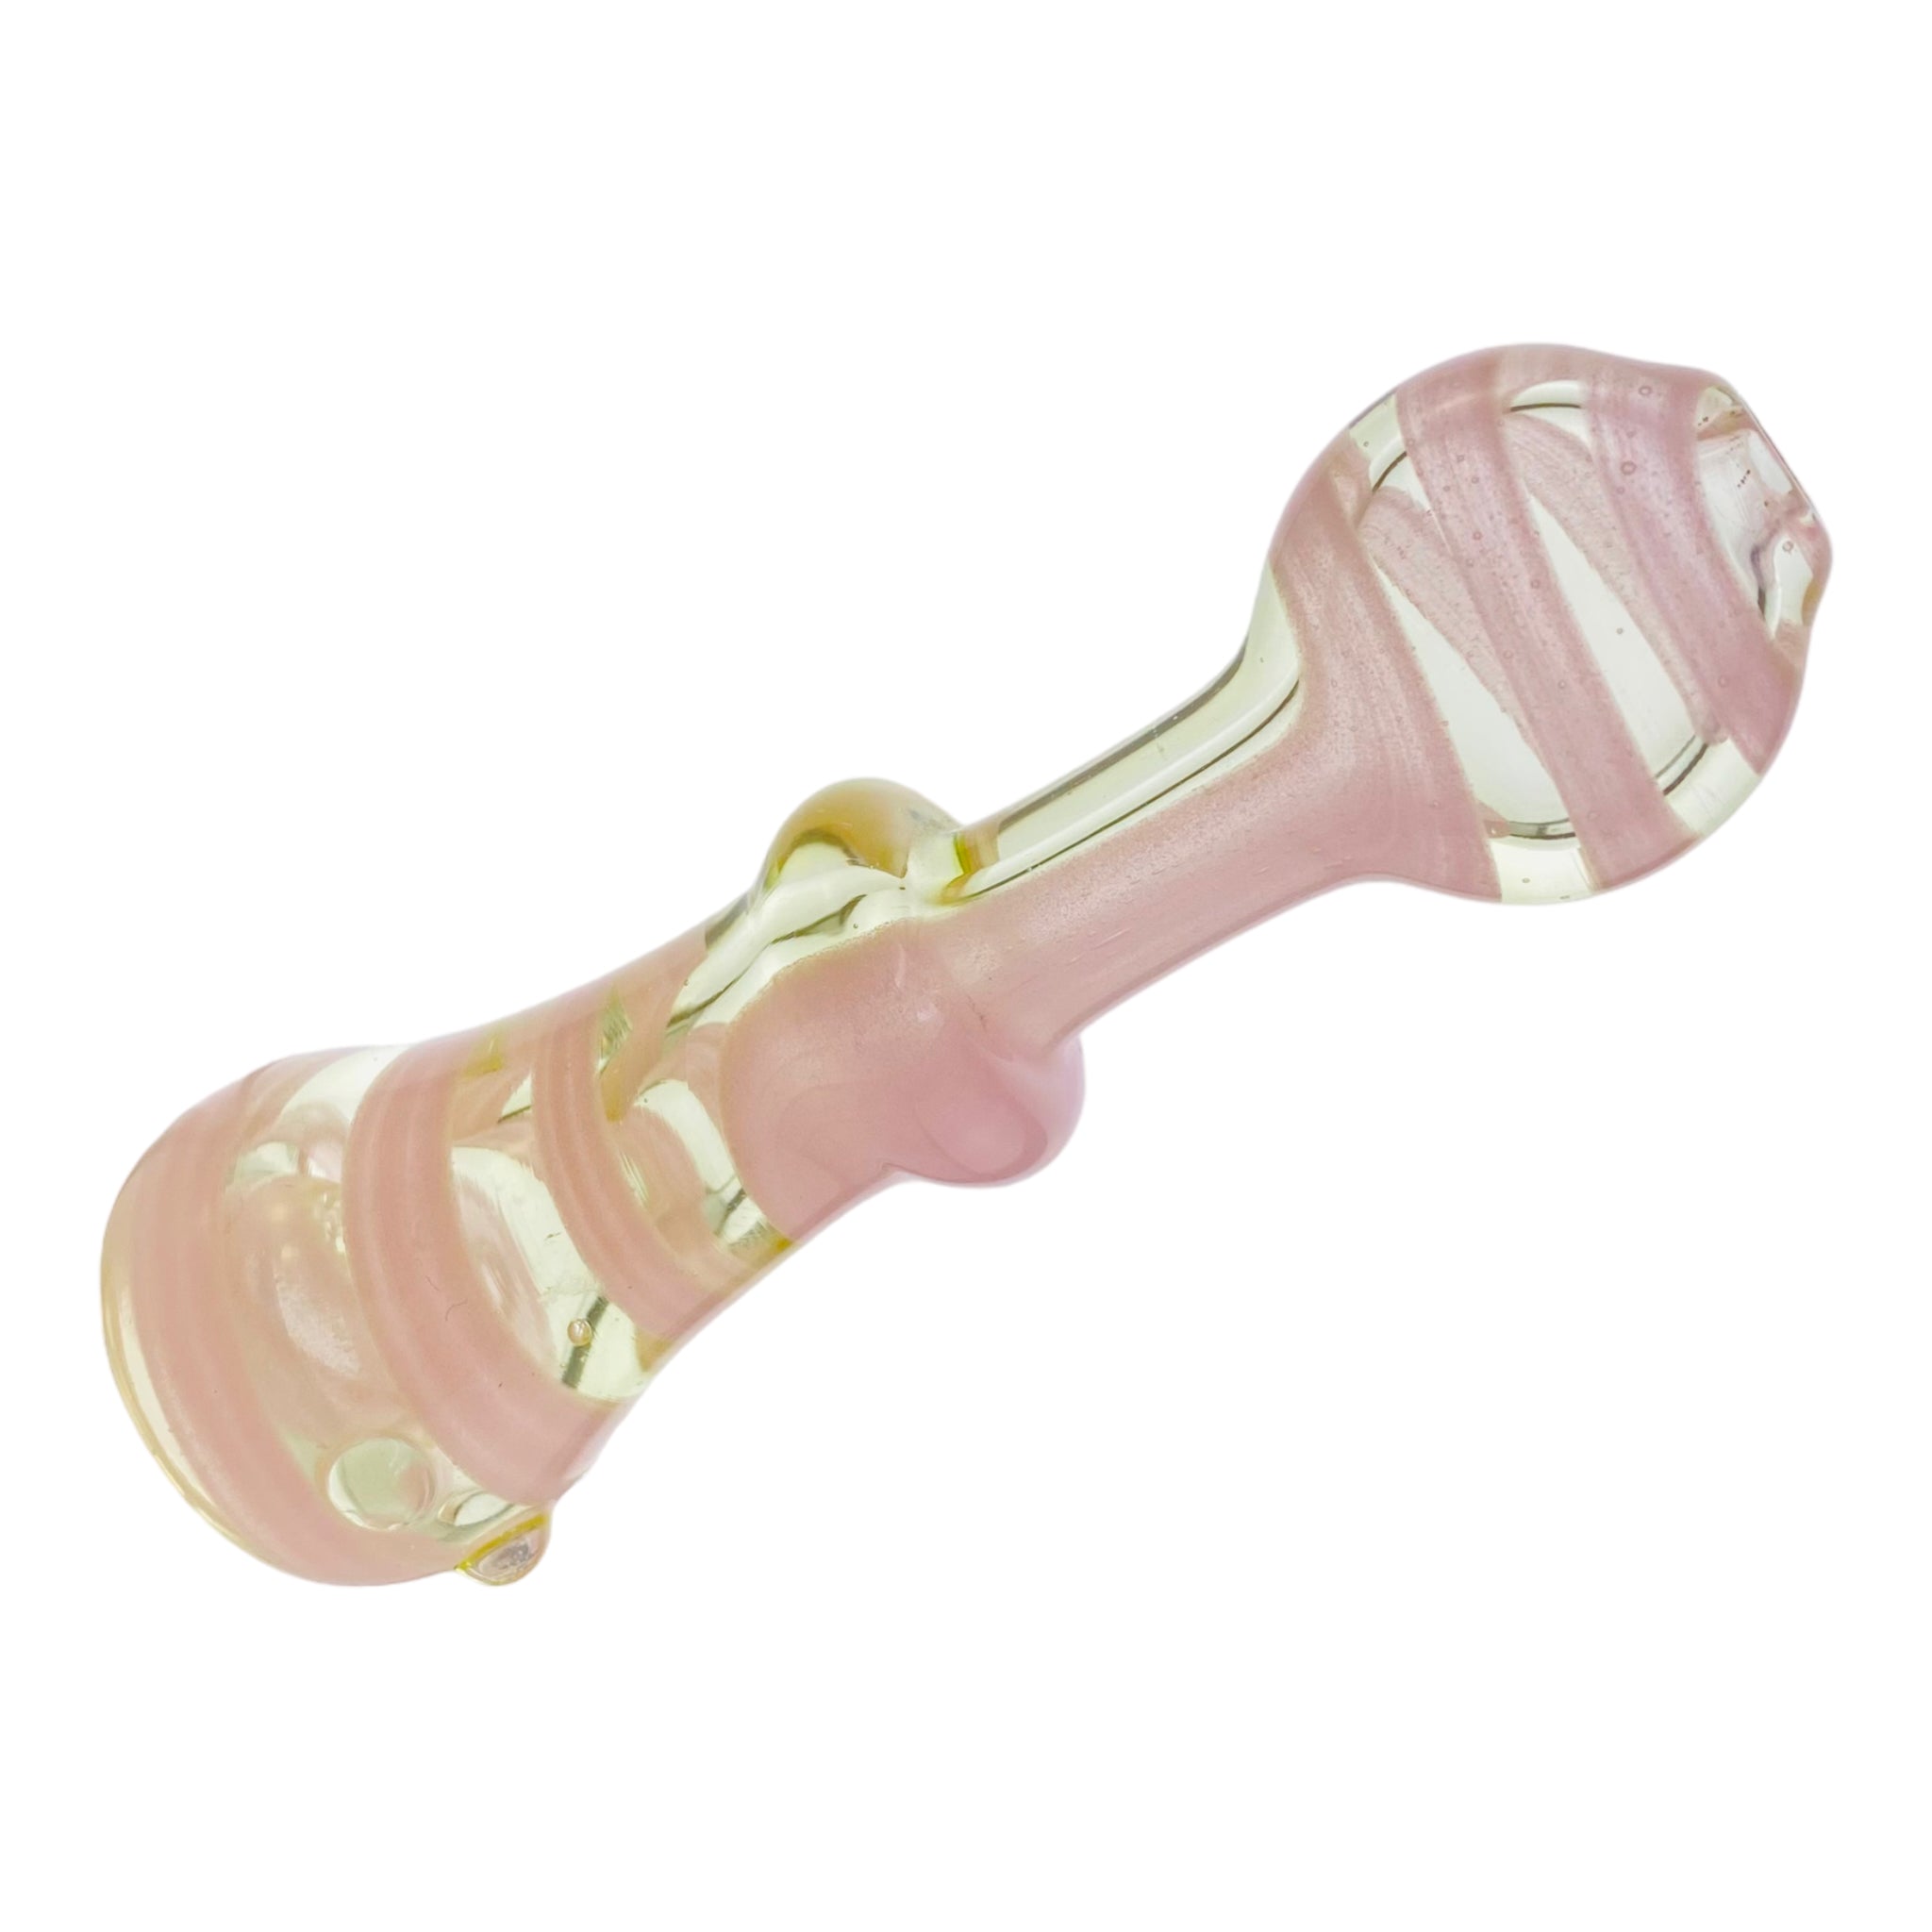 Glass Chillum Pipe - Pink Twirl Over Light Green Glass